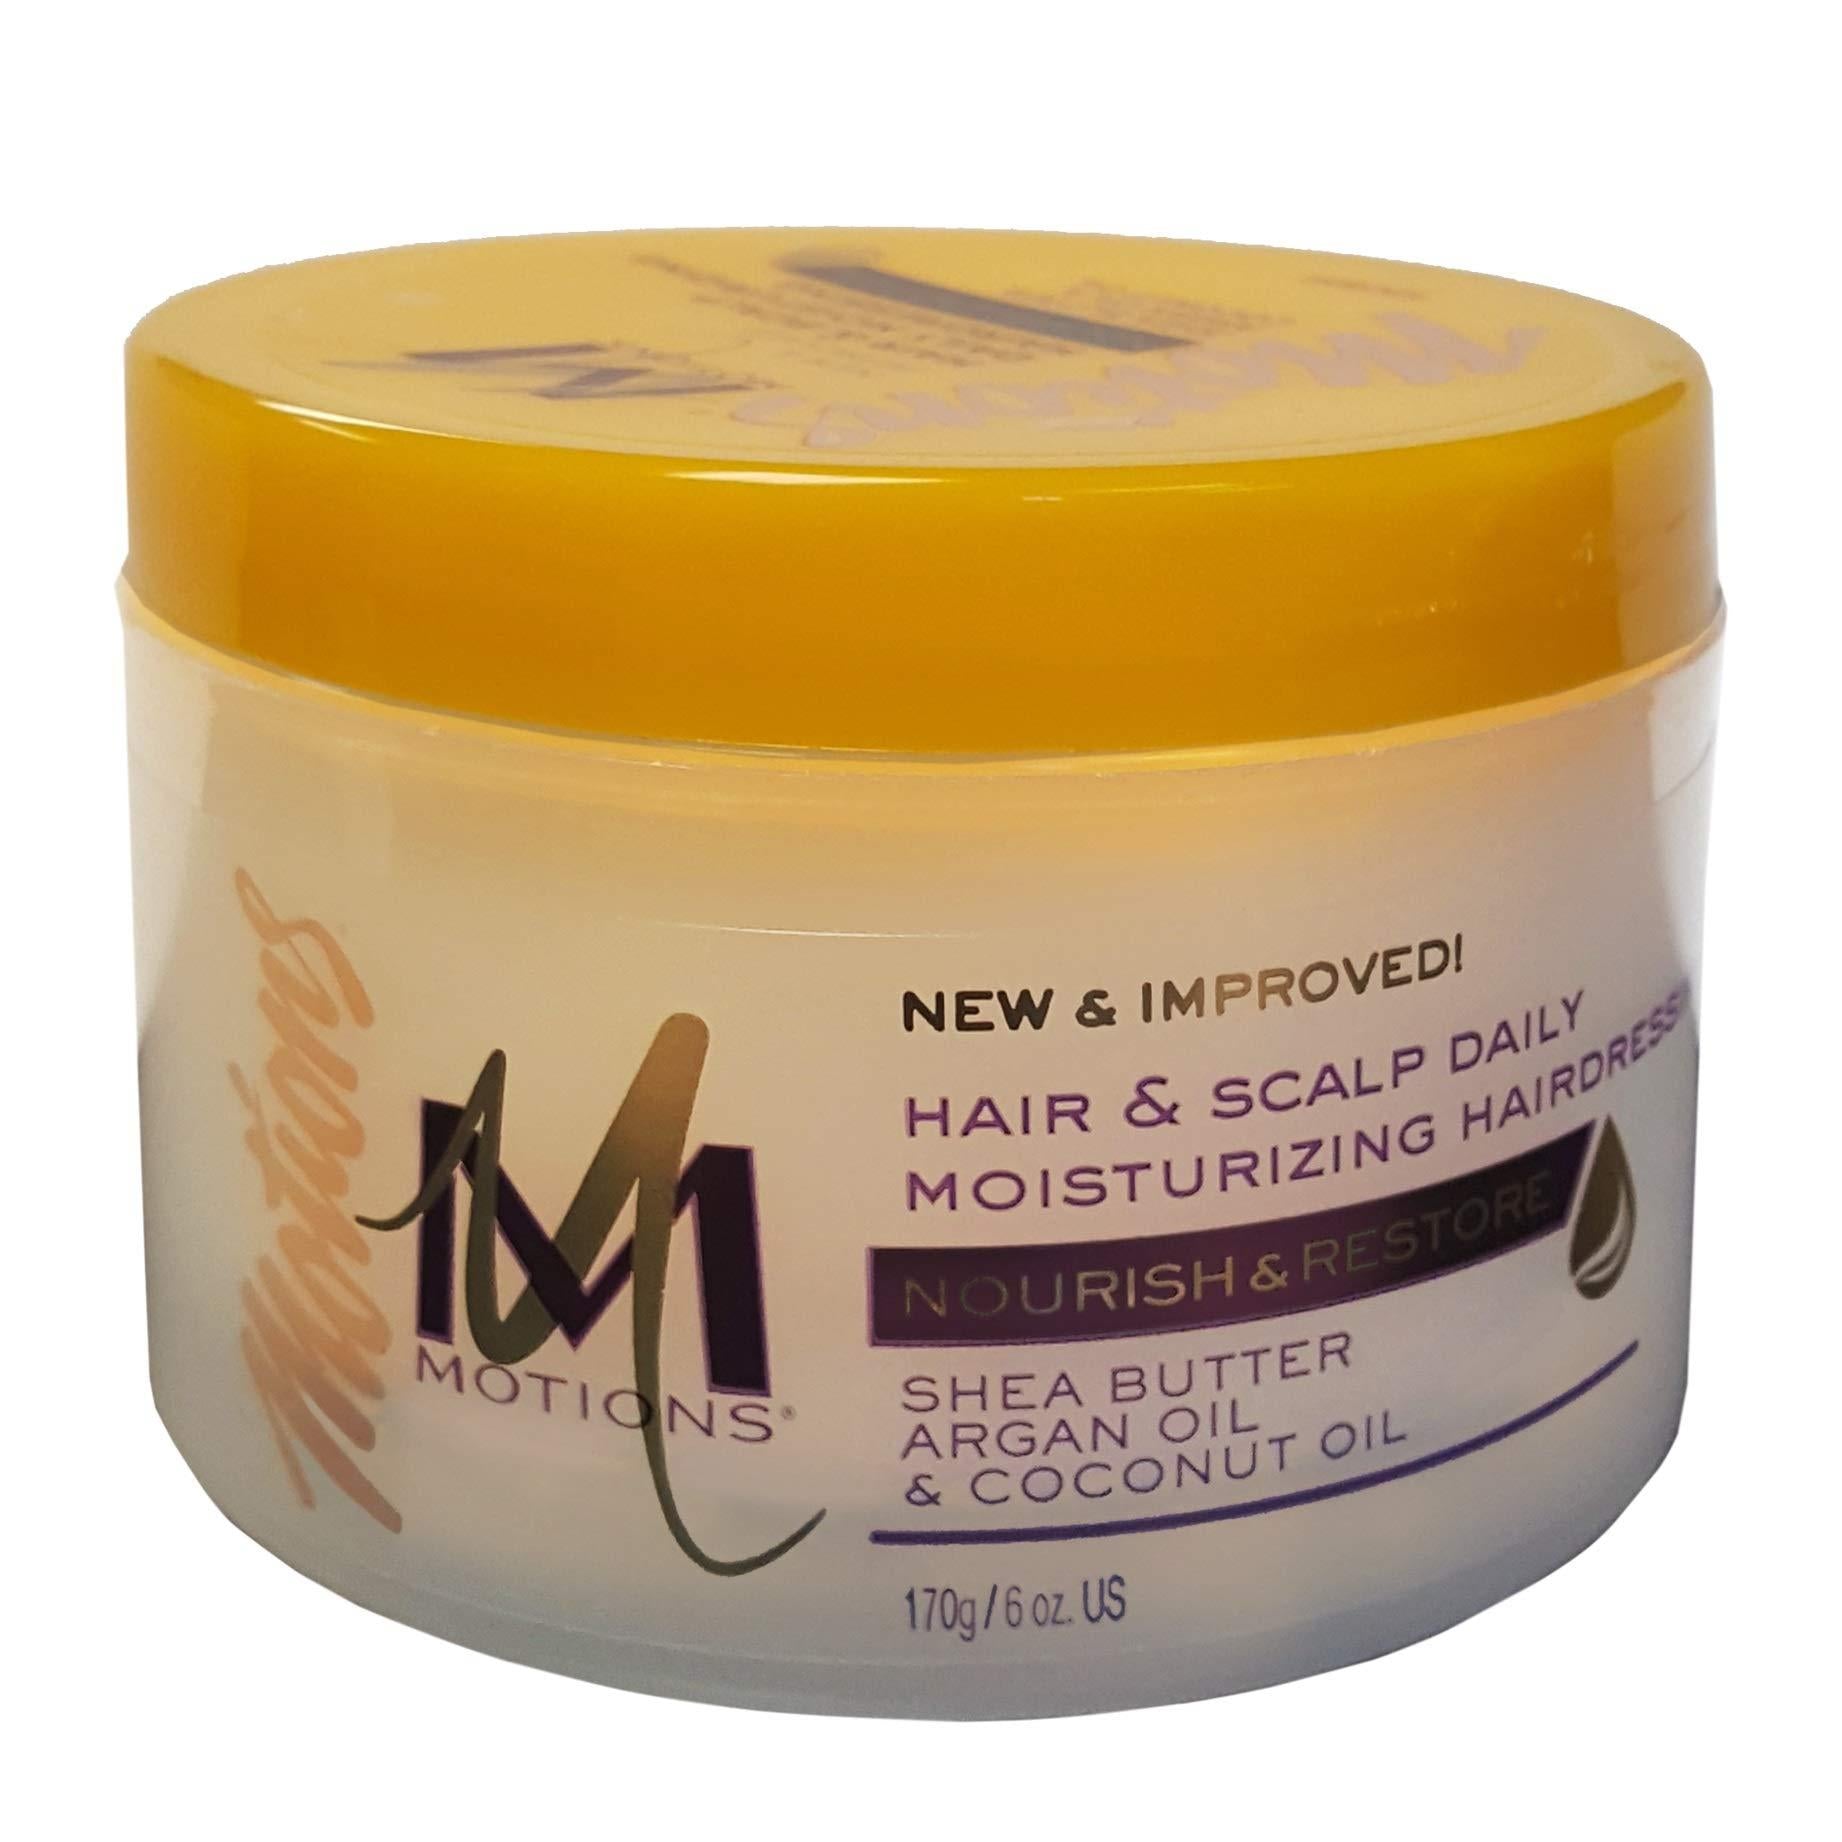 Motions Nourish & Care, Hair & Scalp Daily Moisturizing Hairdressing 6 oz (2 pack)